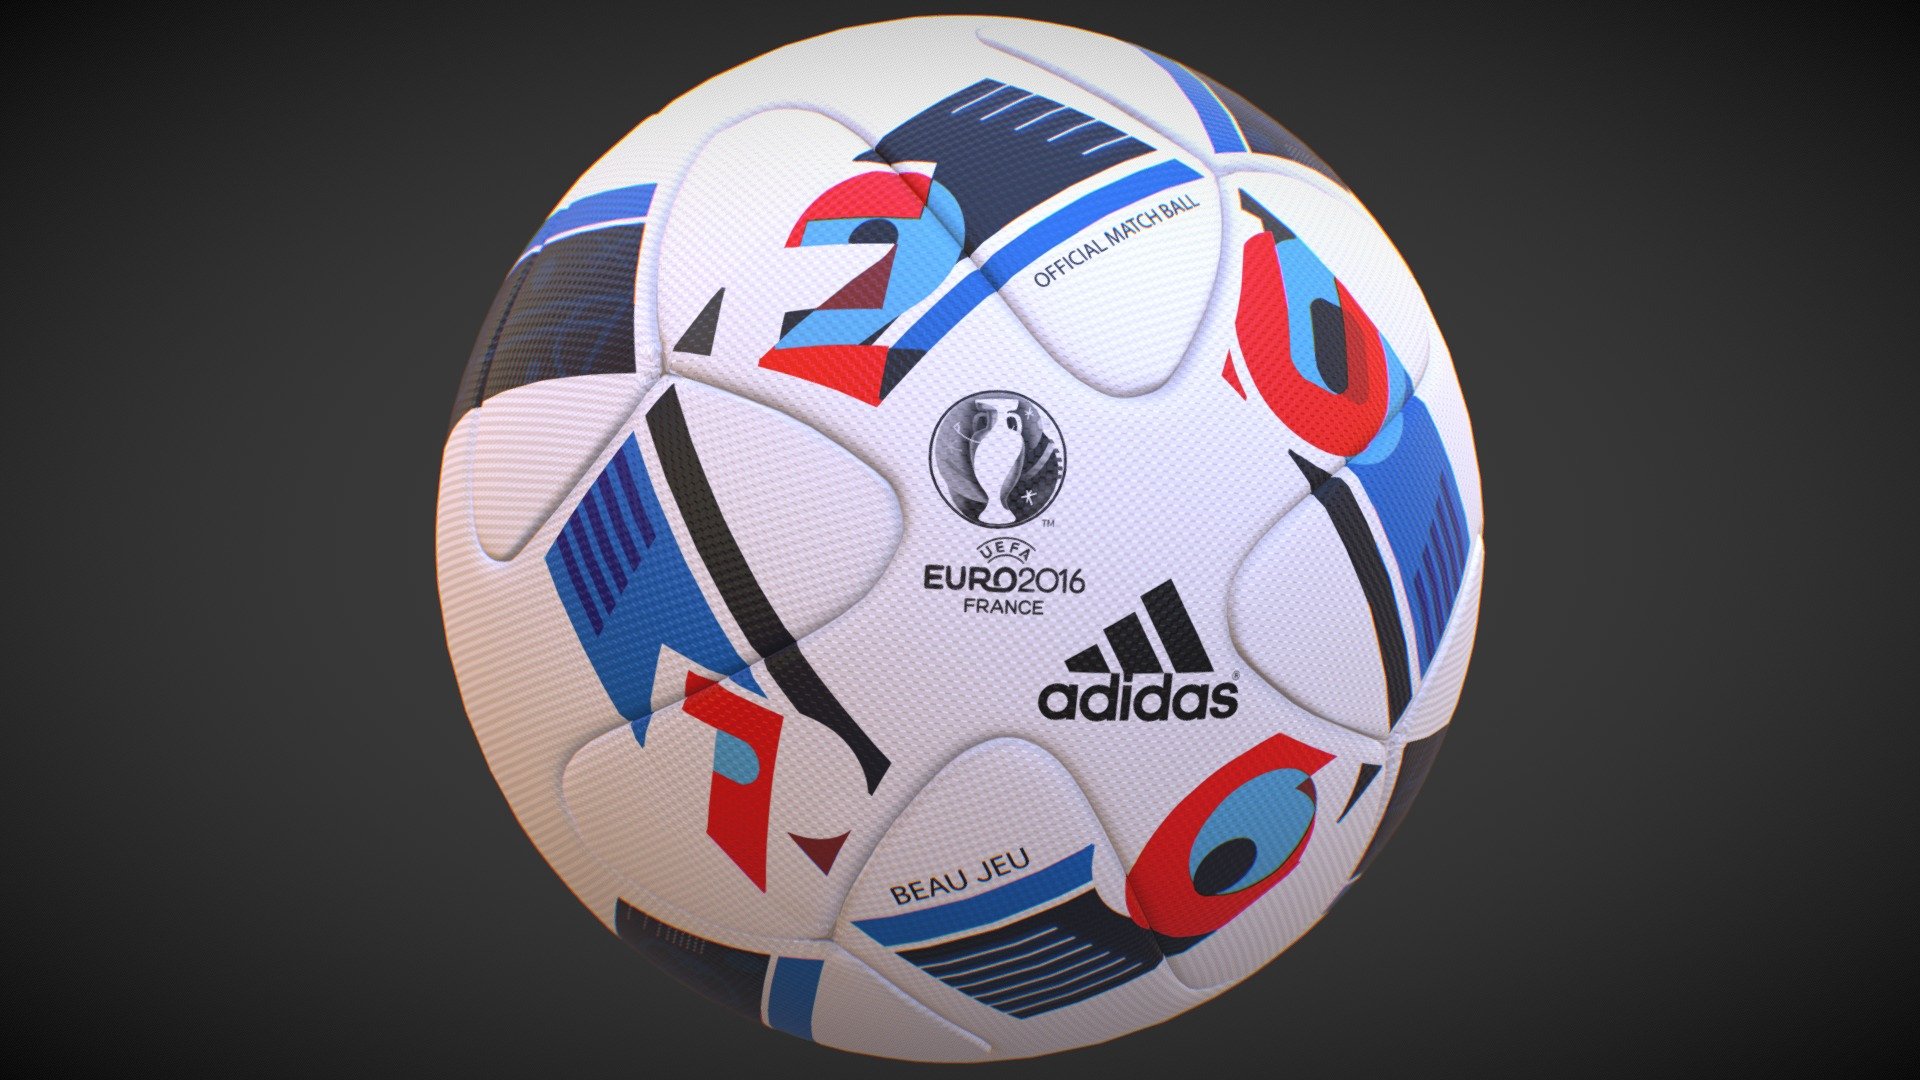 Adidas beau jeu. Euro 2024 adidas Official Ball. Sat Max Ball. Max ball